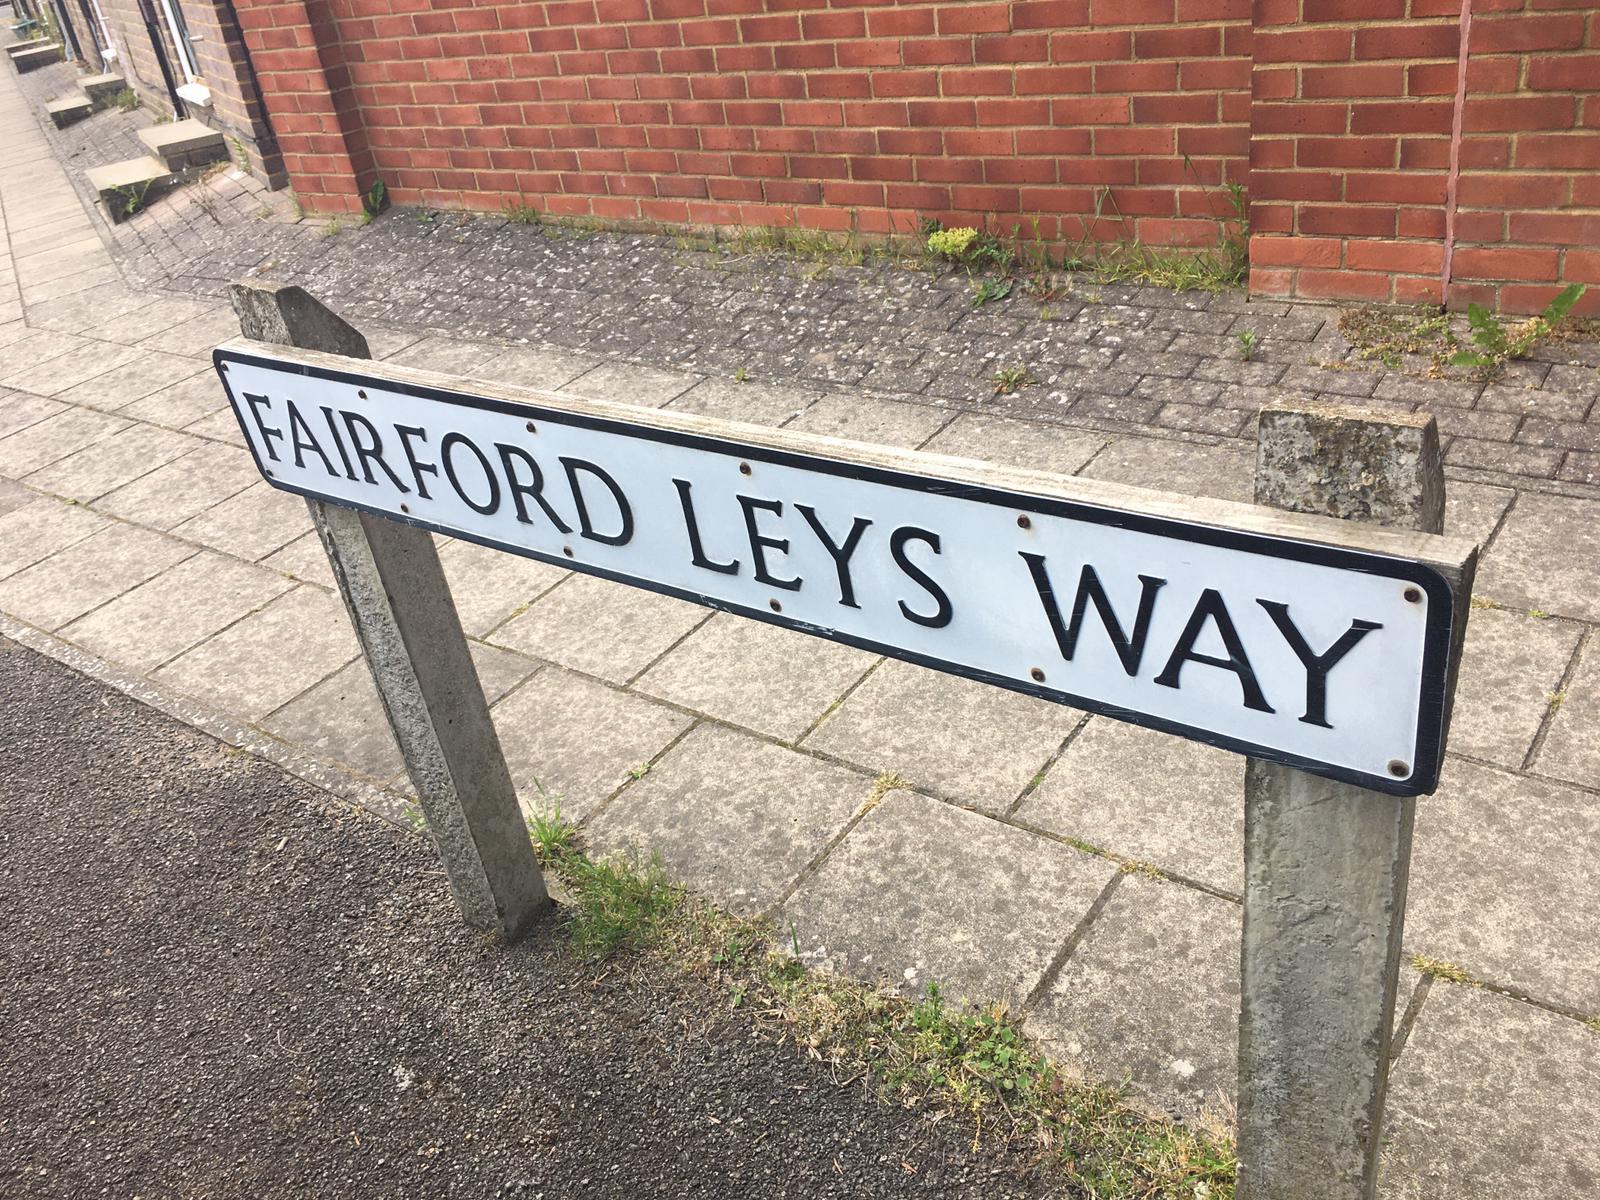 It happened on Fairford Leys Way in Fairford Leys, near Aylesbury 